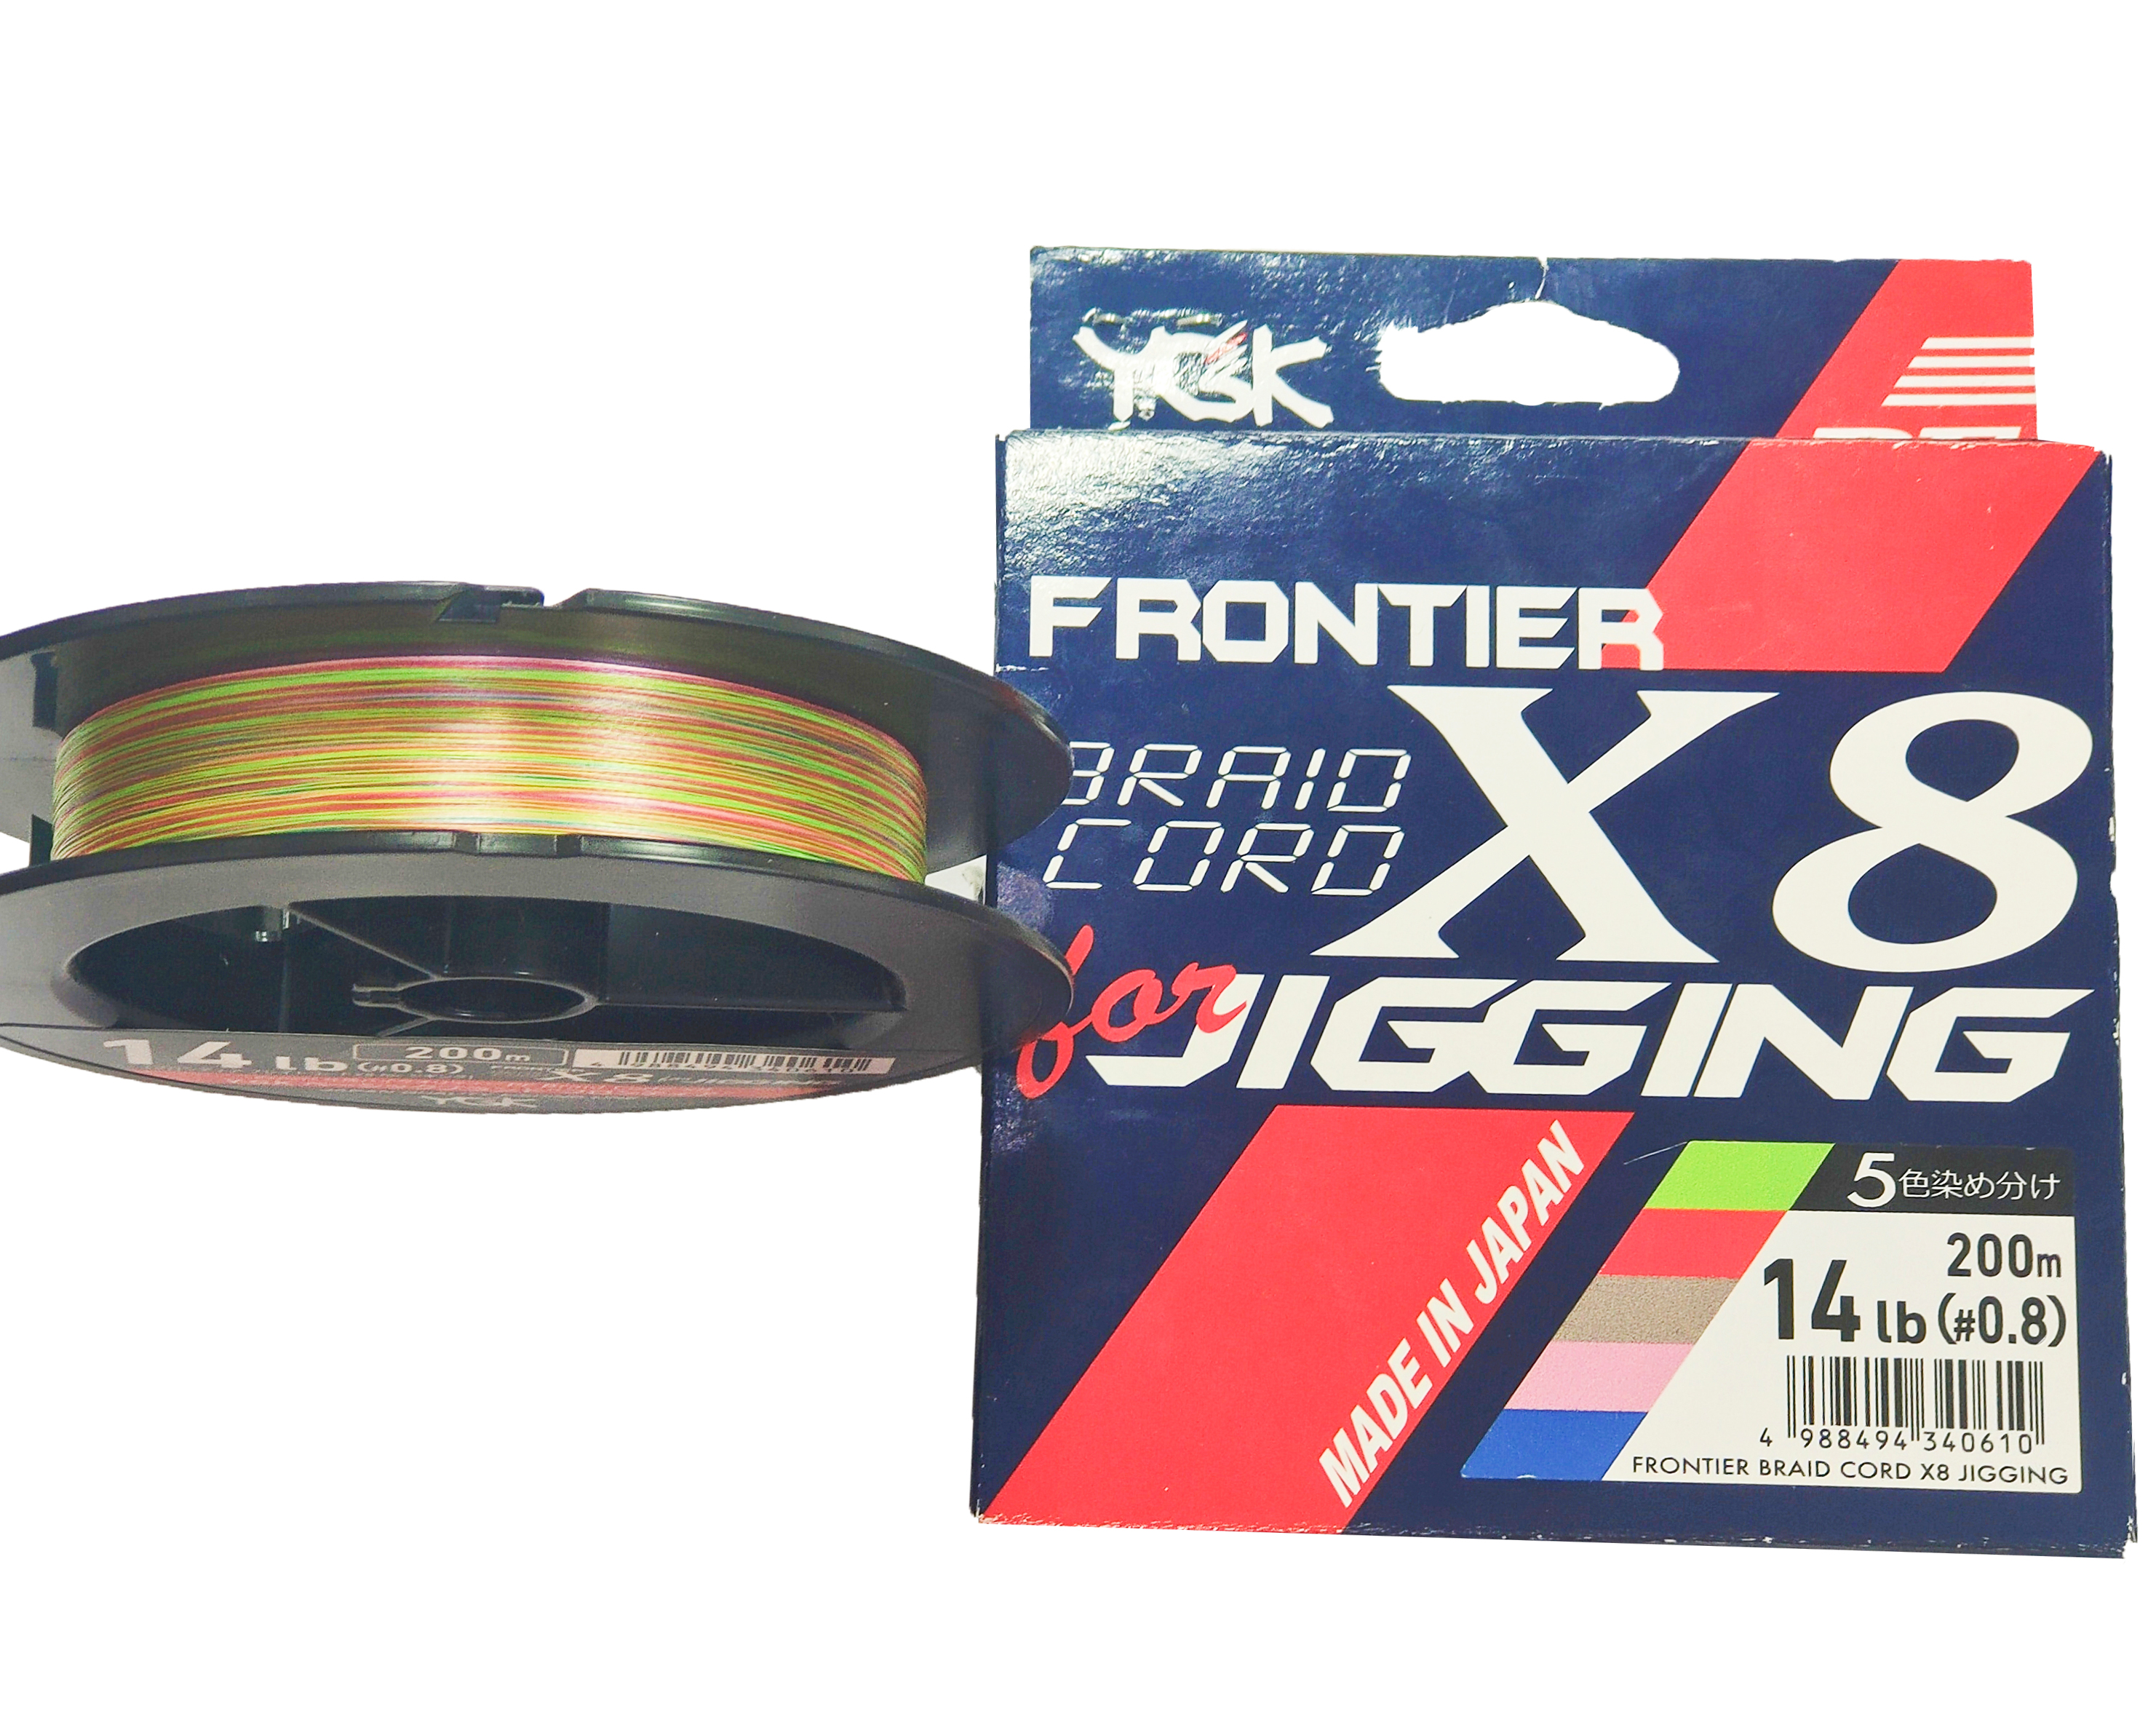 Шнур YGK Frontier Braid Cord X8 for Jigging 200м PE 0,8 - фото 1